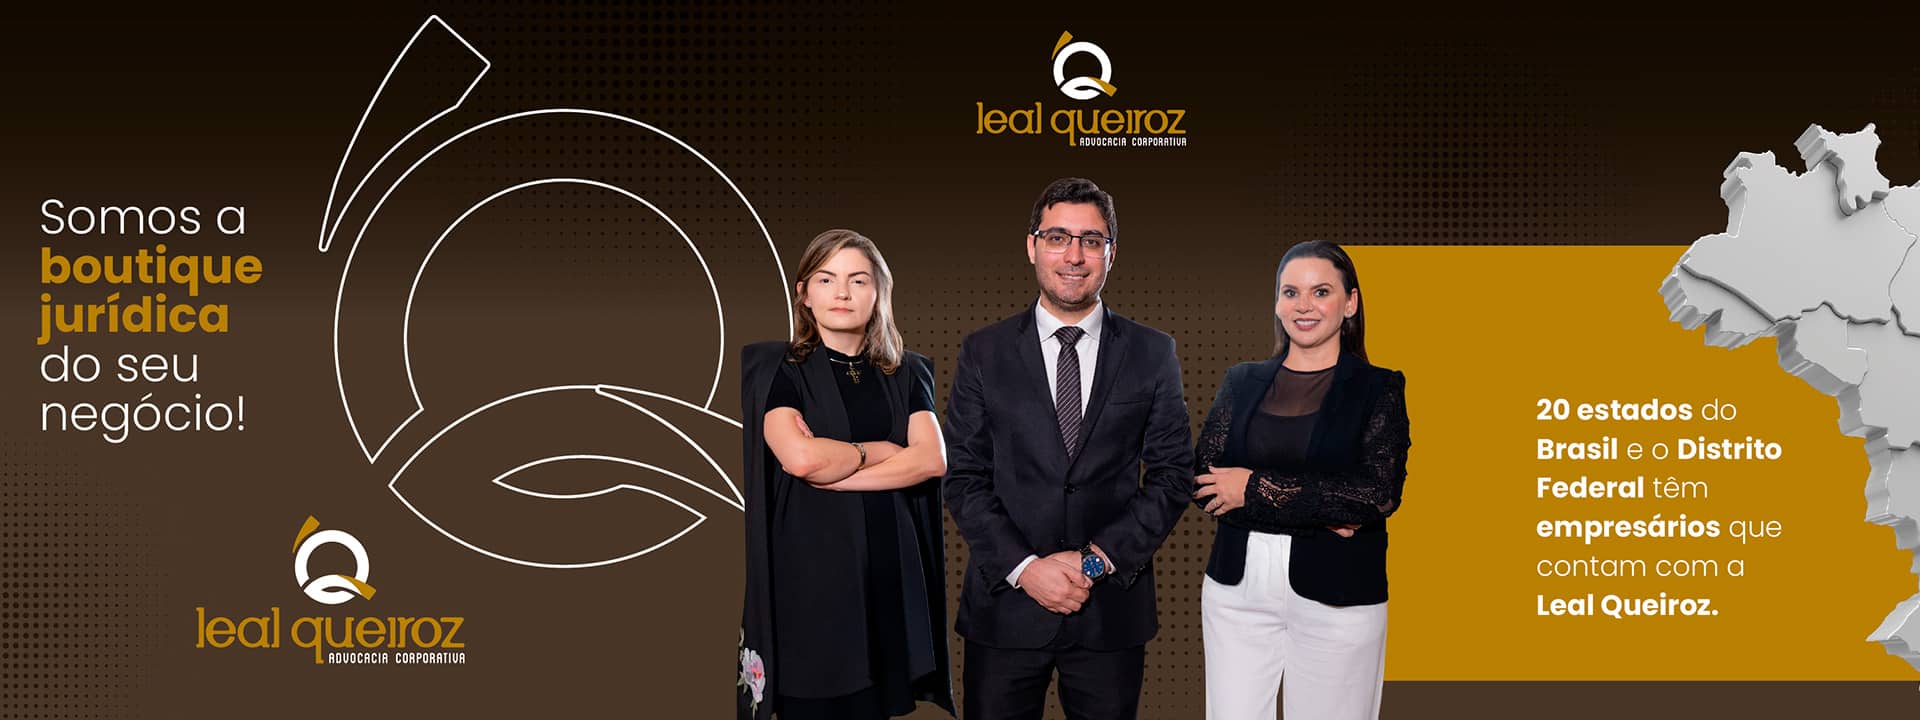 Leal Queiroz: Dra. Andreza Almeida, Dr. Allan Queiroz, Dra. Jéssica Leal